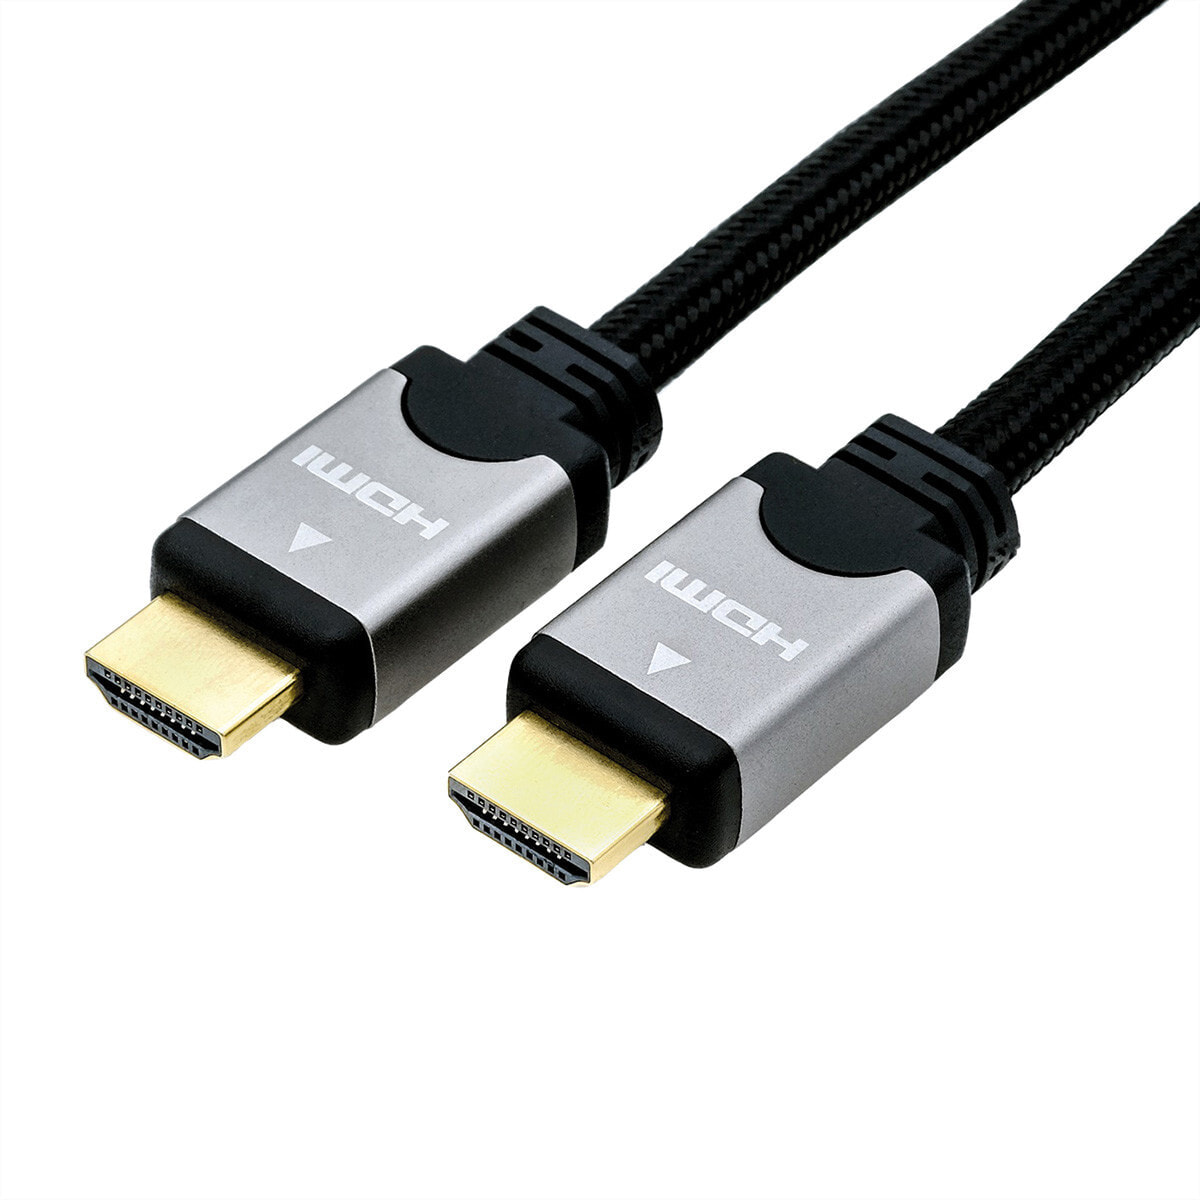 ROLINE 11.04.5856 HDMI кабель 1,5 m HDMI Тип A (Стандарт) Черный, Серебристый